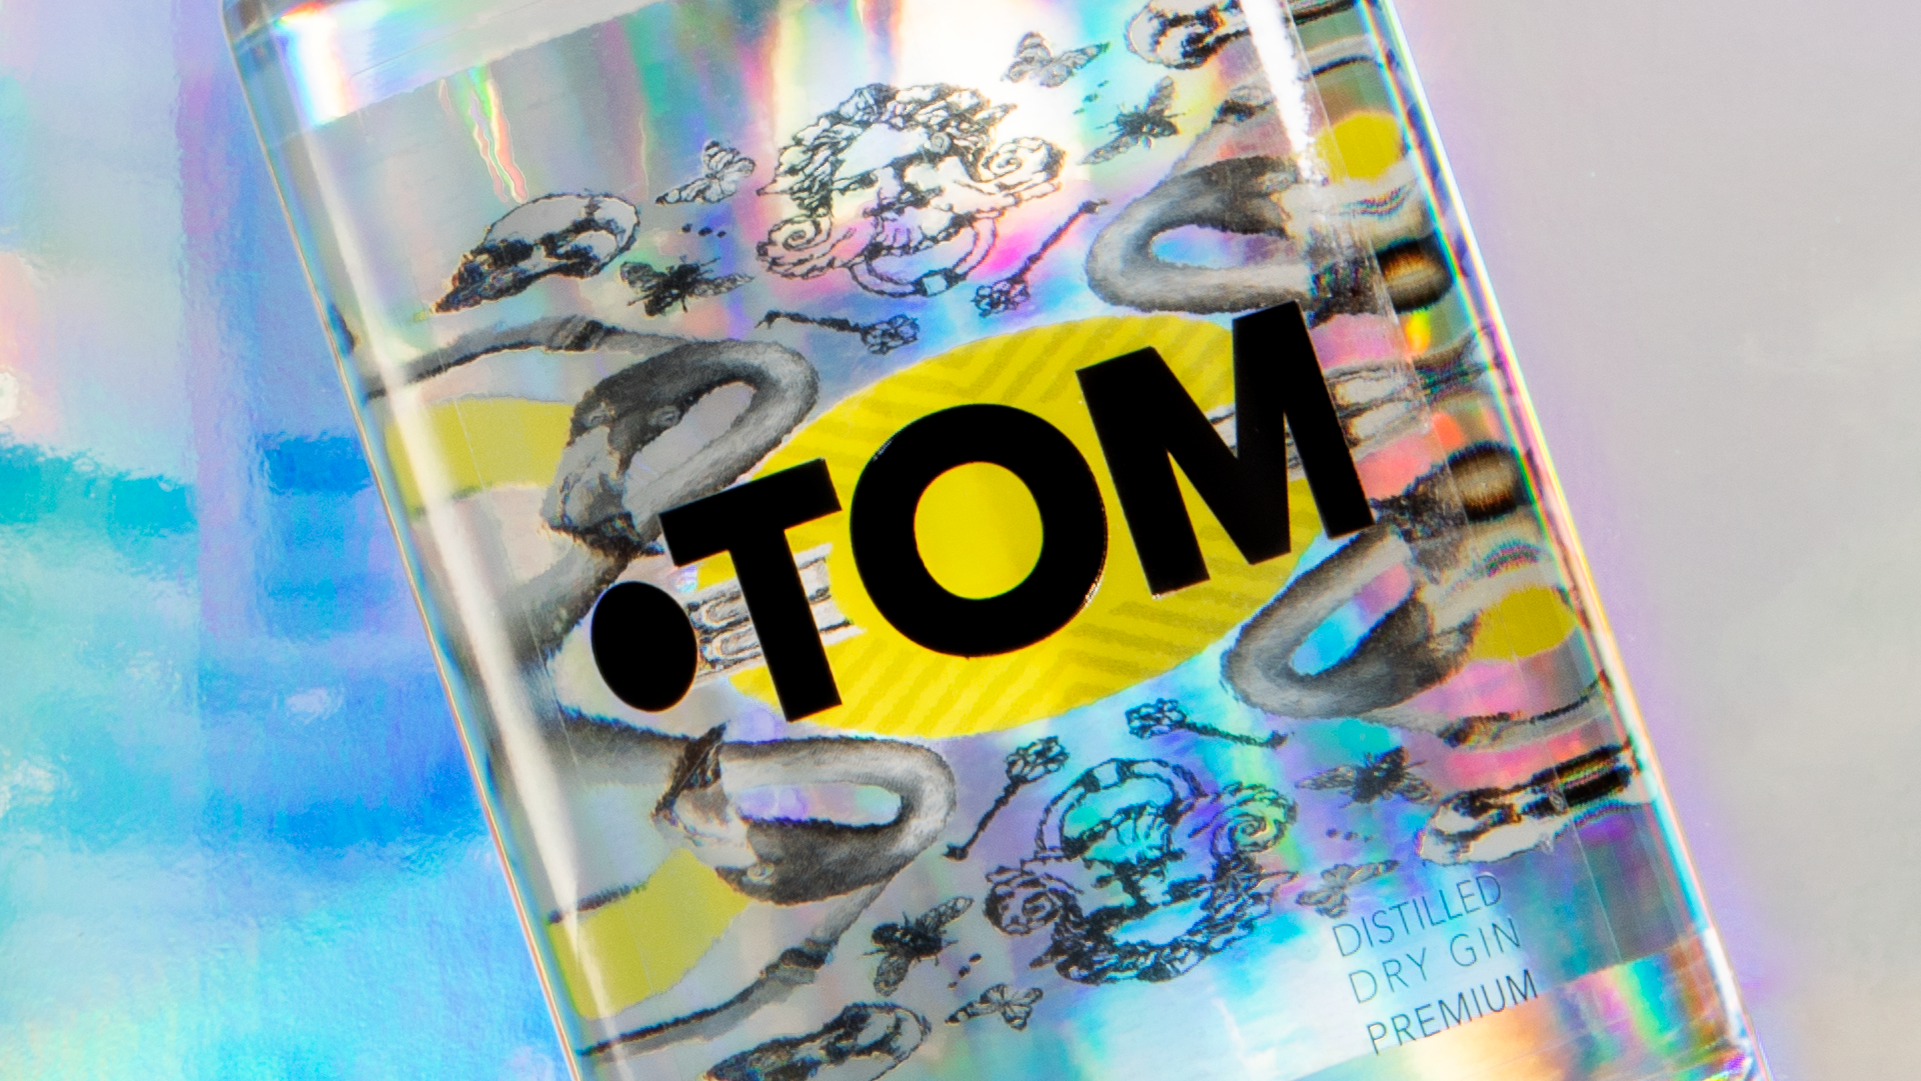 Tom Premium Gin